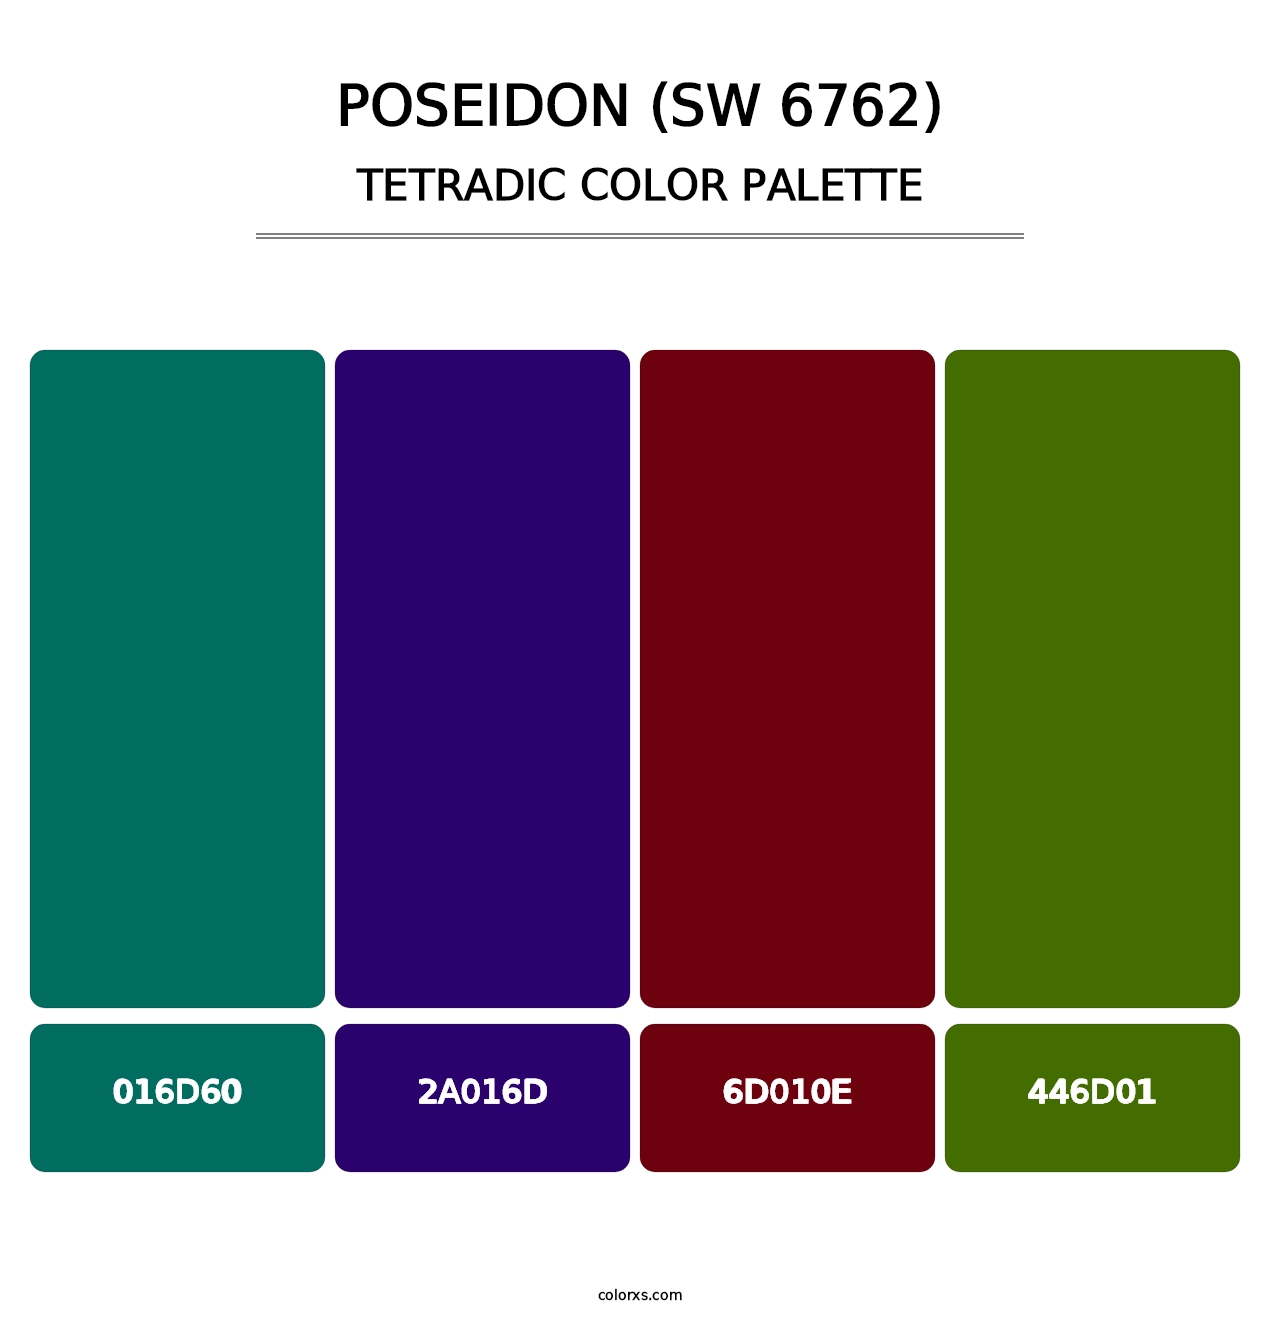 Poseidon (SW 6762) - Tetradic Color Palette